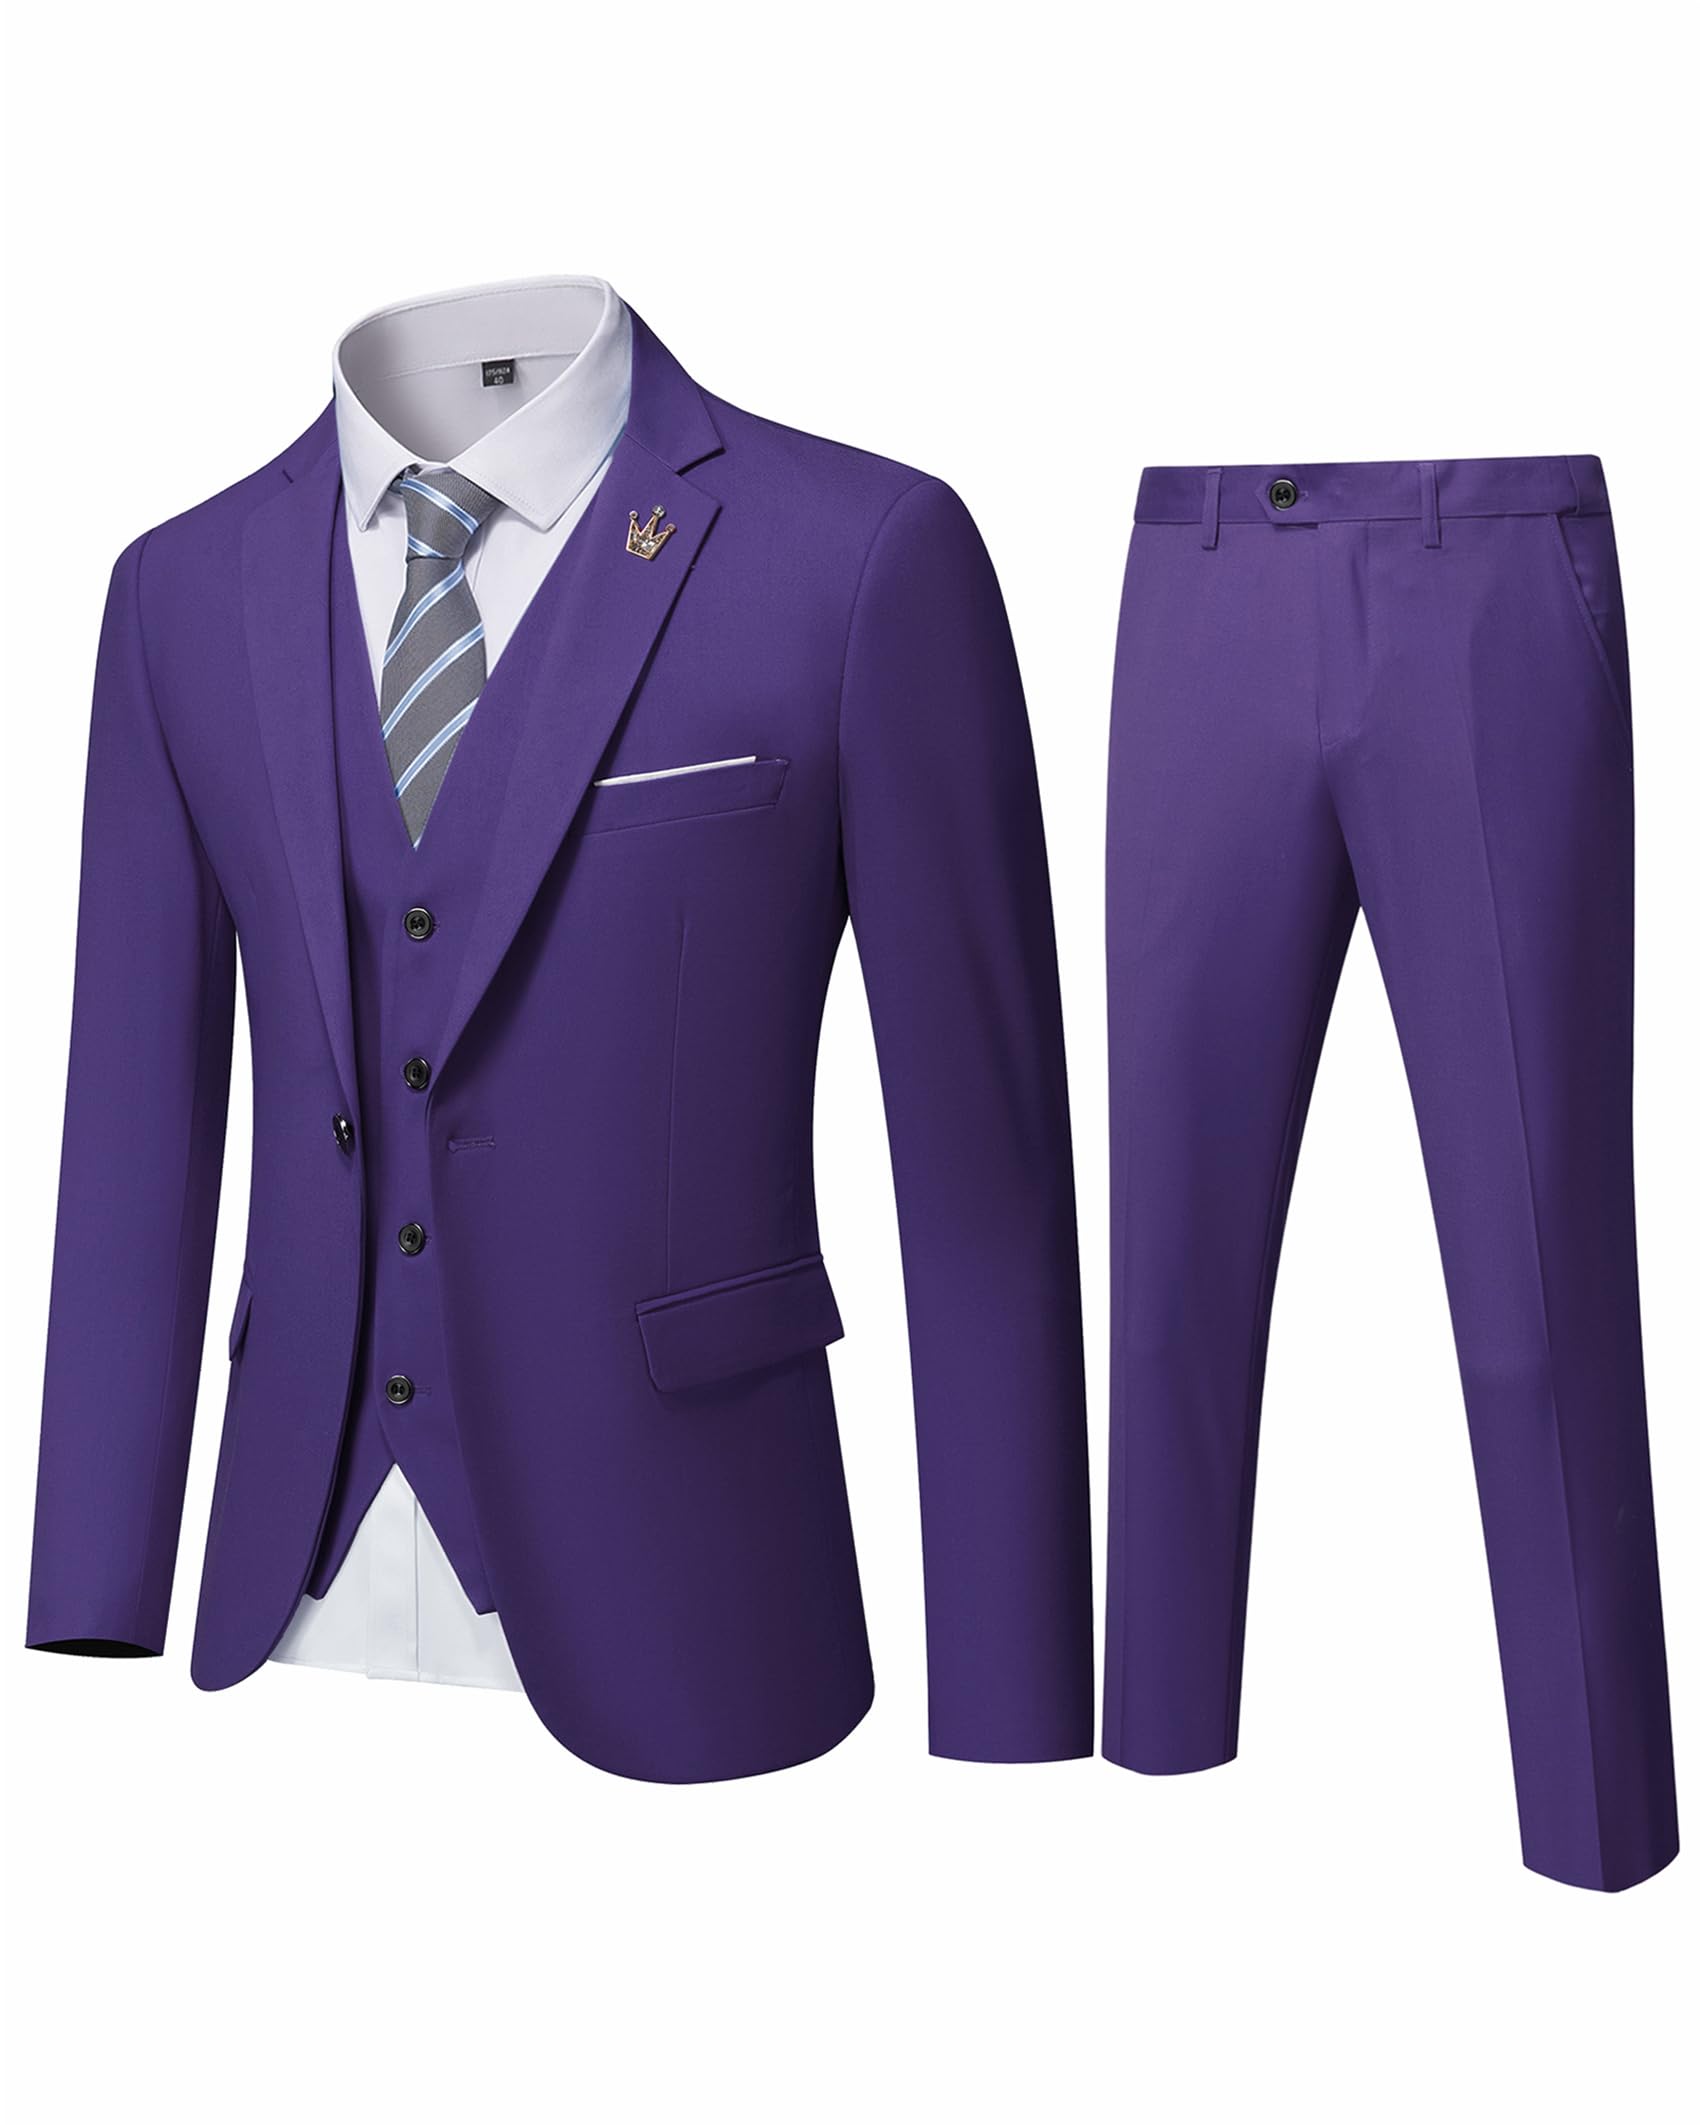 EastSide Herren Slim Fit 3-teiliger Anzug, Ein-Knopf-Blazer-Set, Jacke Weste & Hose, deep purple, S